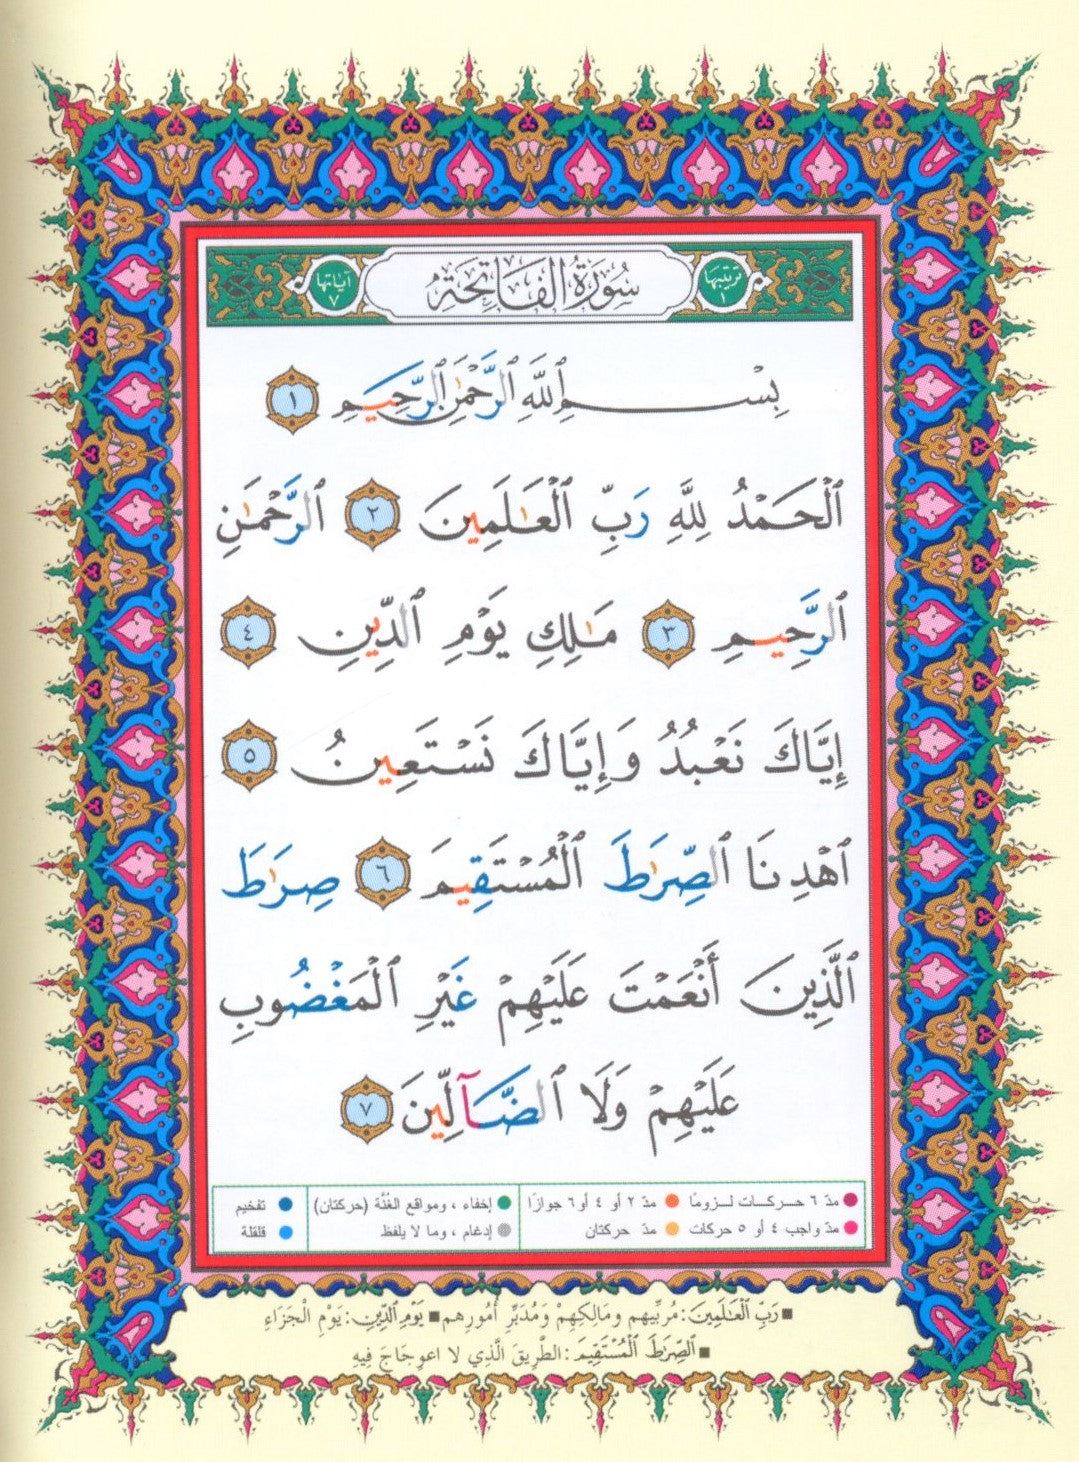 Color Coded Tajweed Qur'an With Zipper 3.5x5" Medium Size (Arabic Edition)